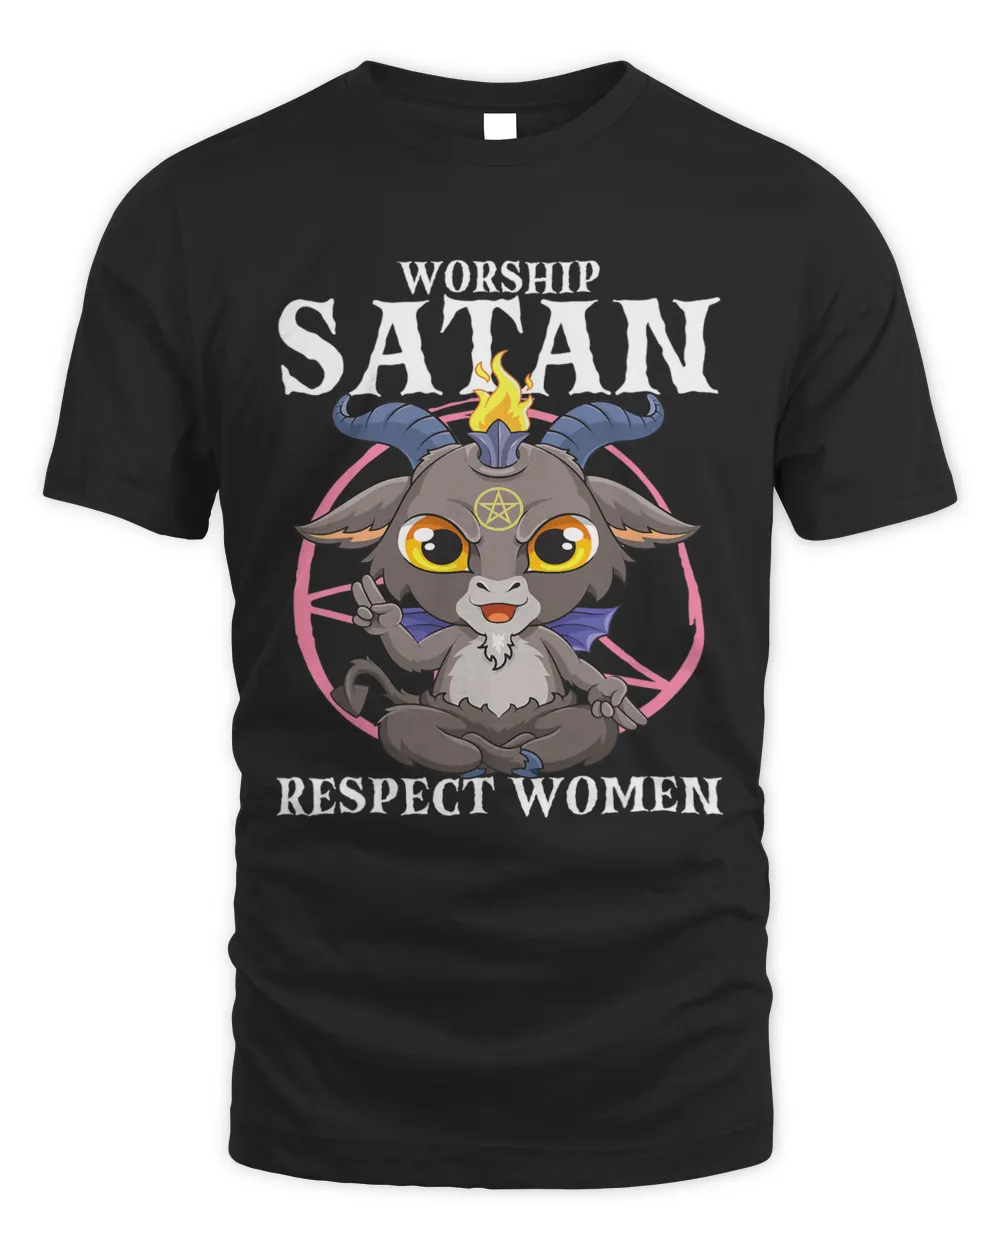 Worship Santan Respect Women Satanic Baphomet Satan Goat